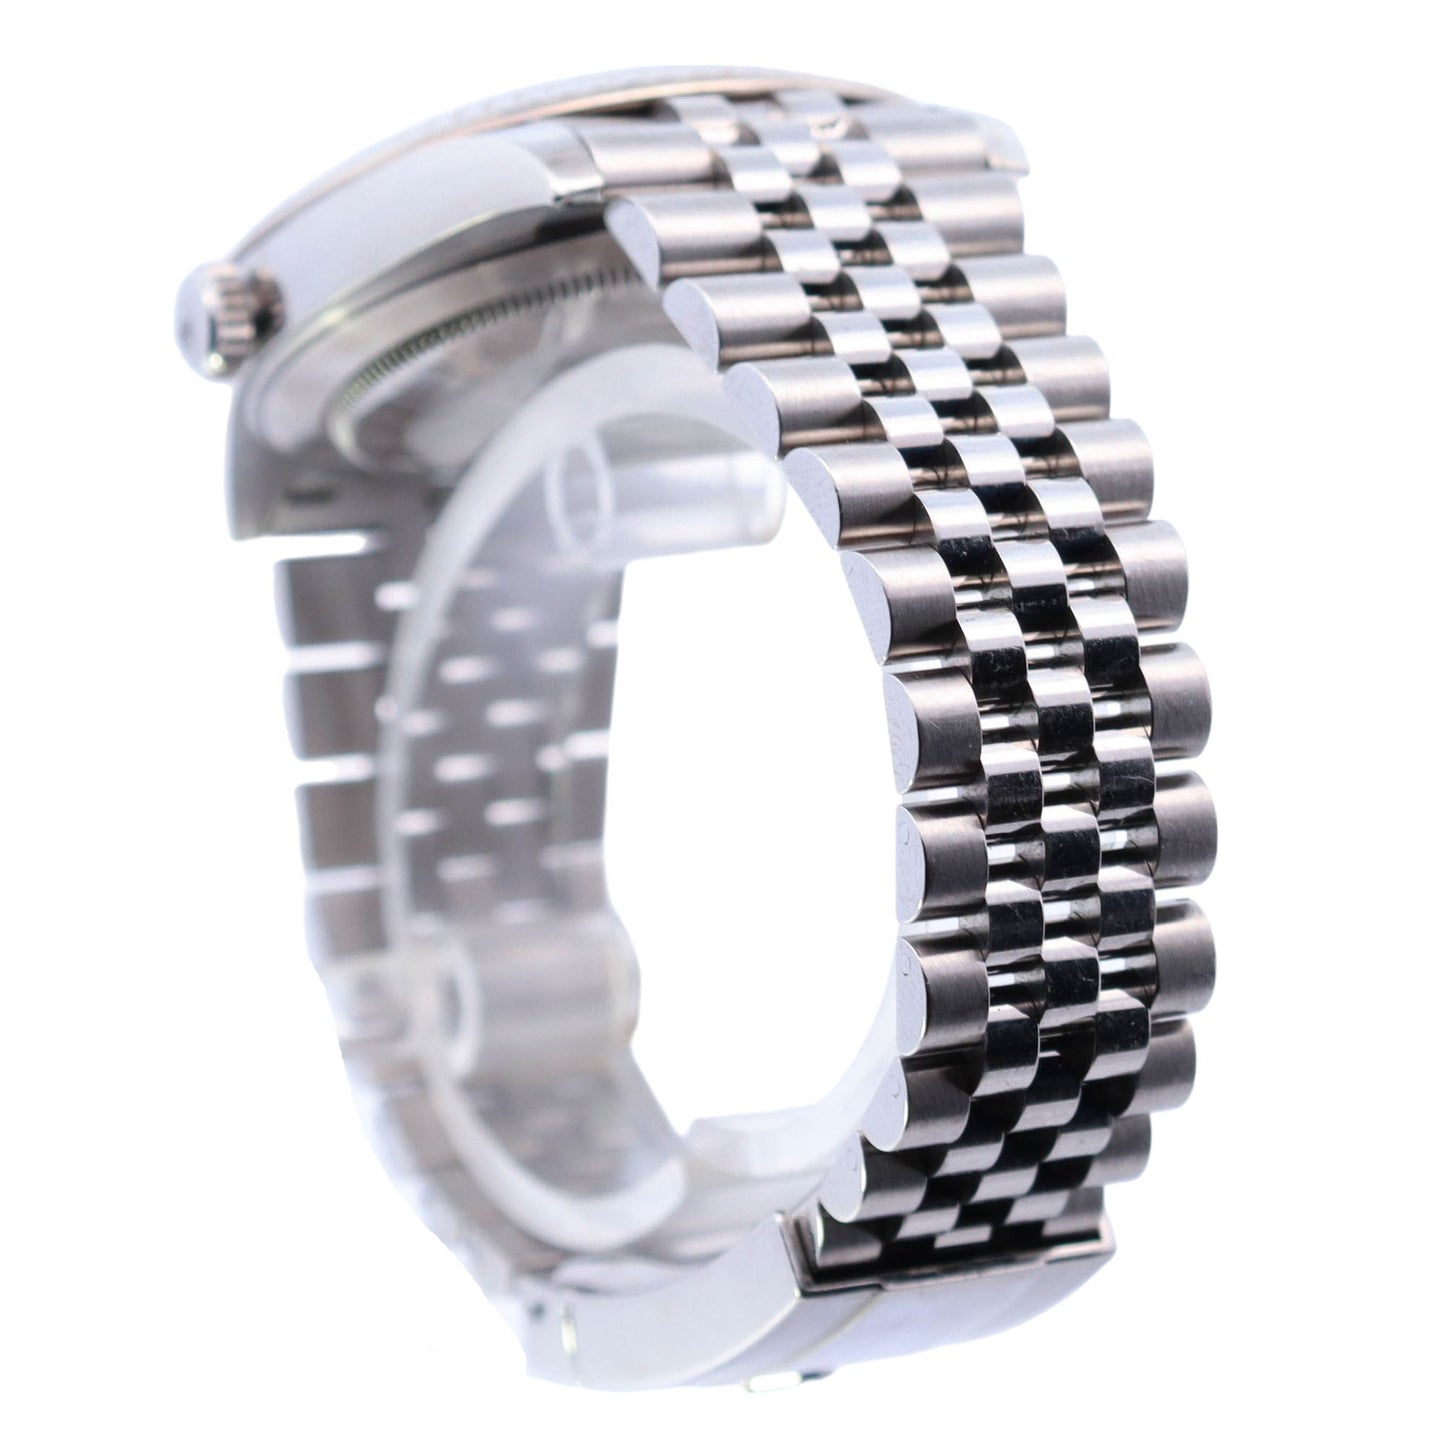 Rolex Datejust Stainless Steel 41mm Aftermarket Red Diamond Arabic Dial Watch Reference #: 126334 - Happy Jewelers Fine Jewelry Lifetime Warranty